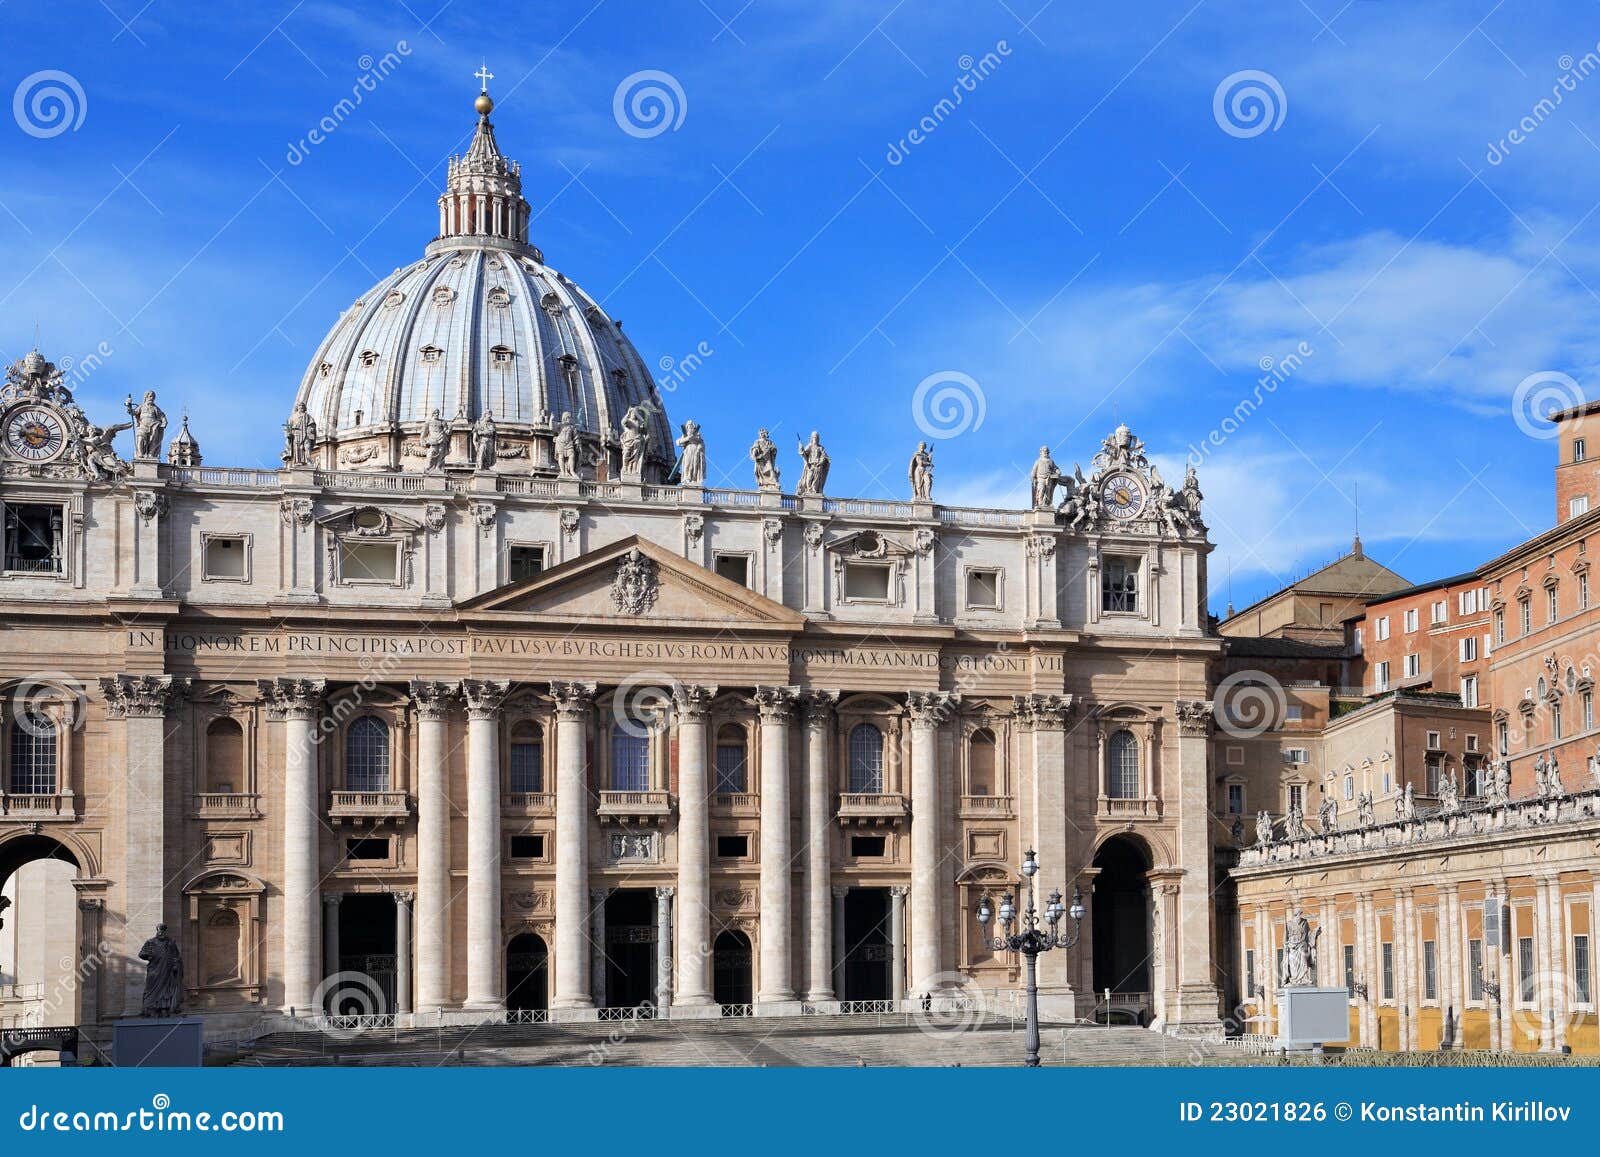 st peter's basilica,rome